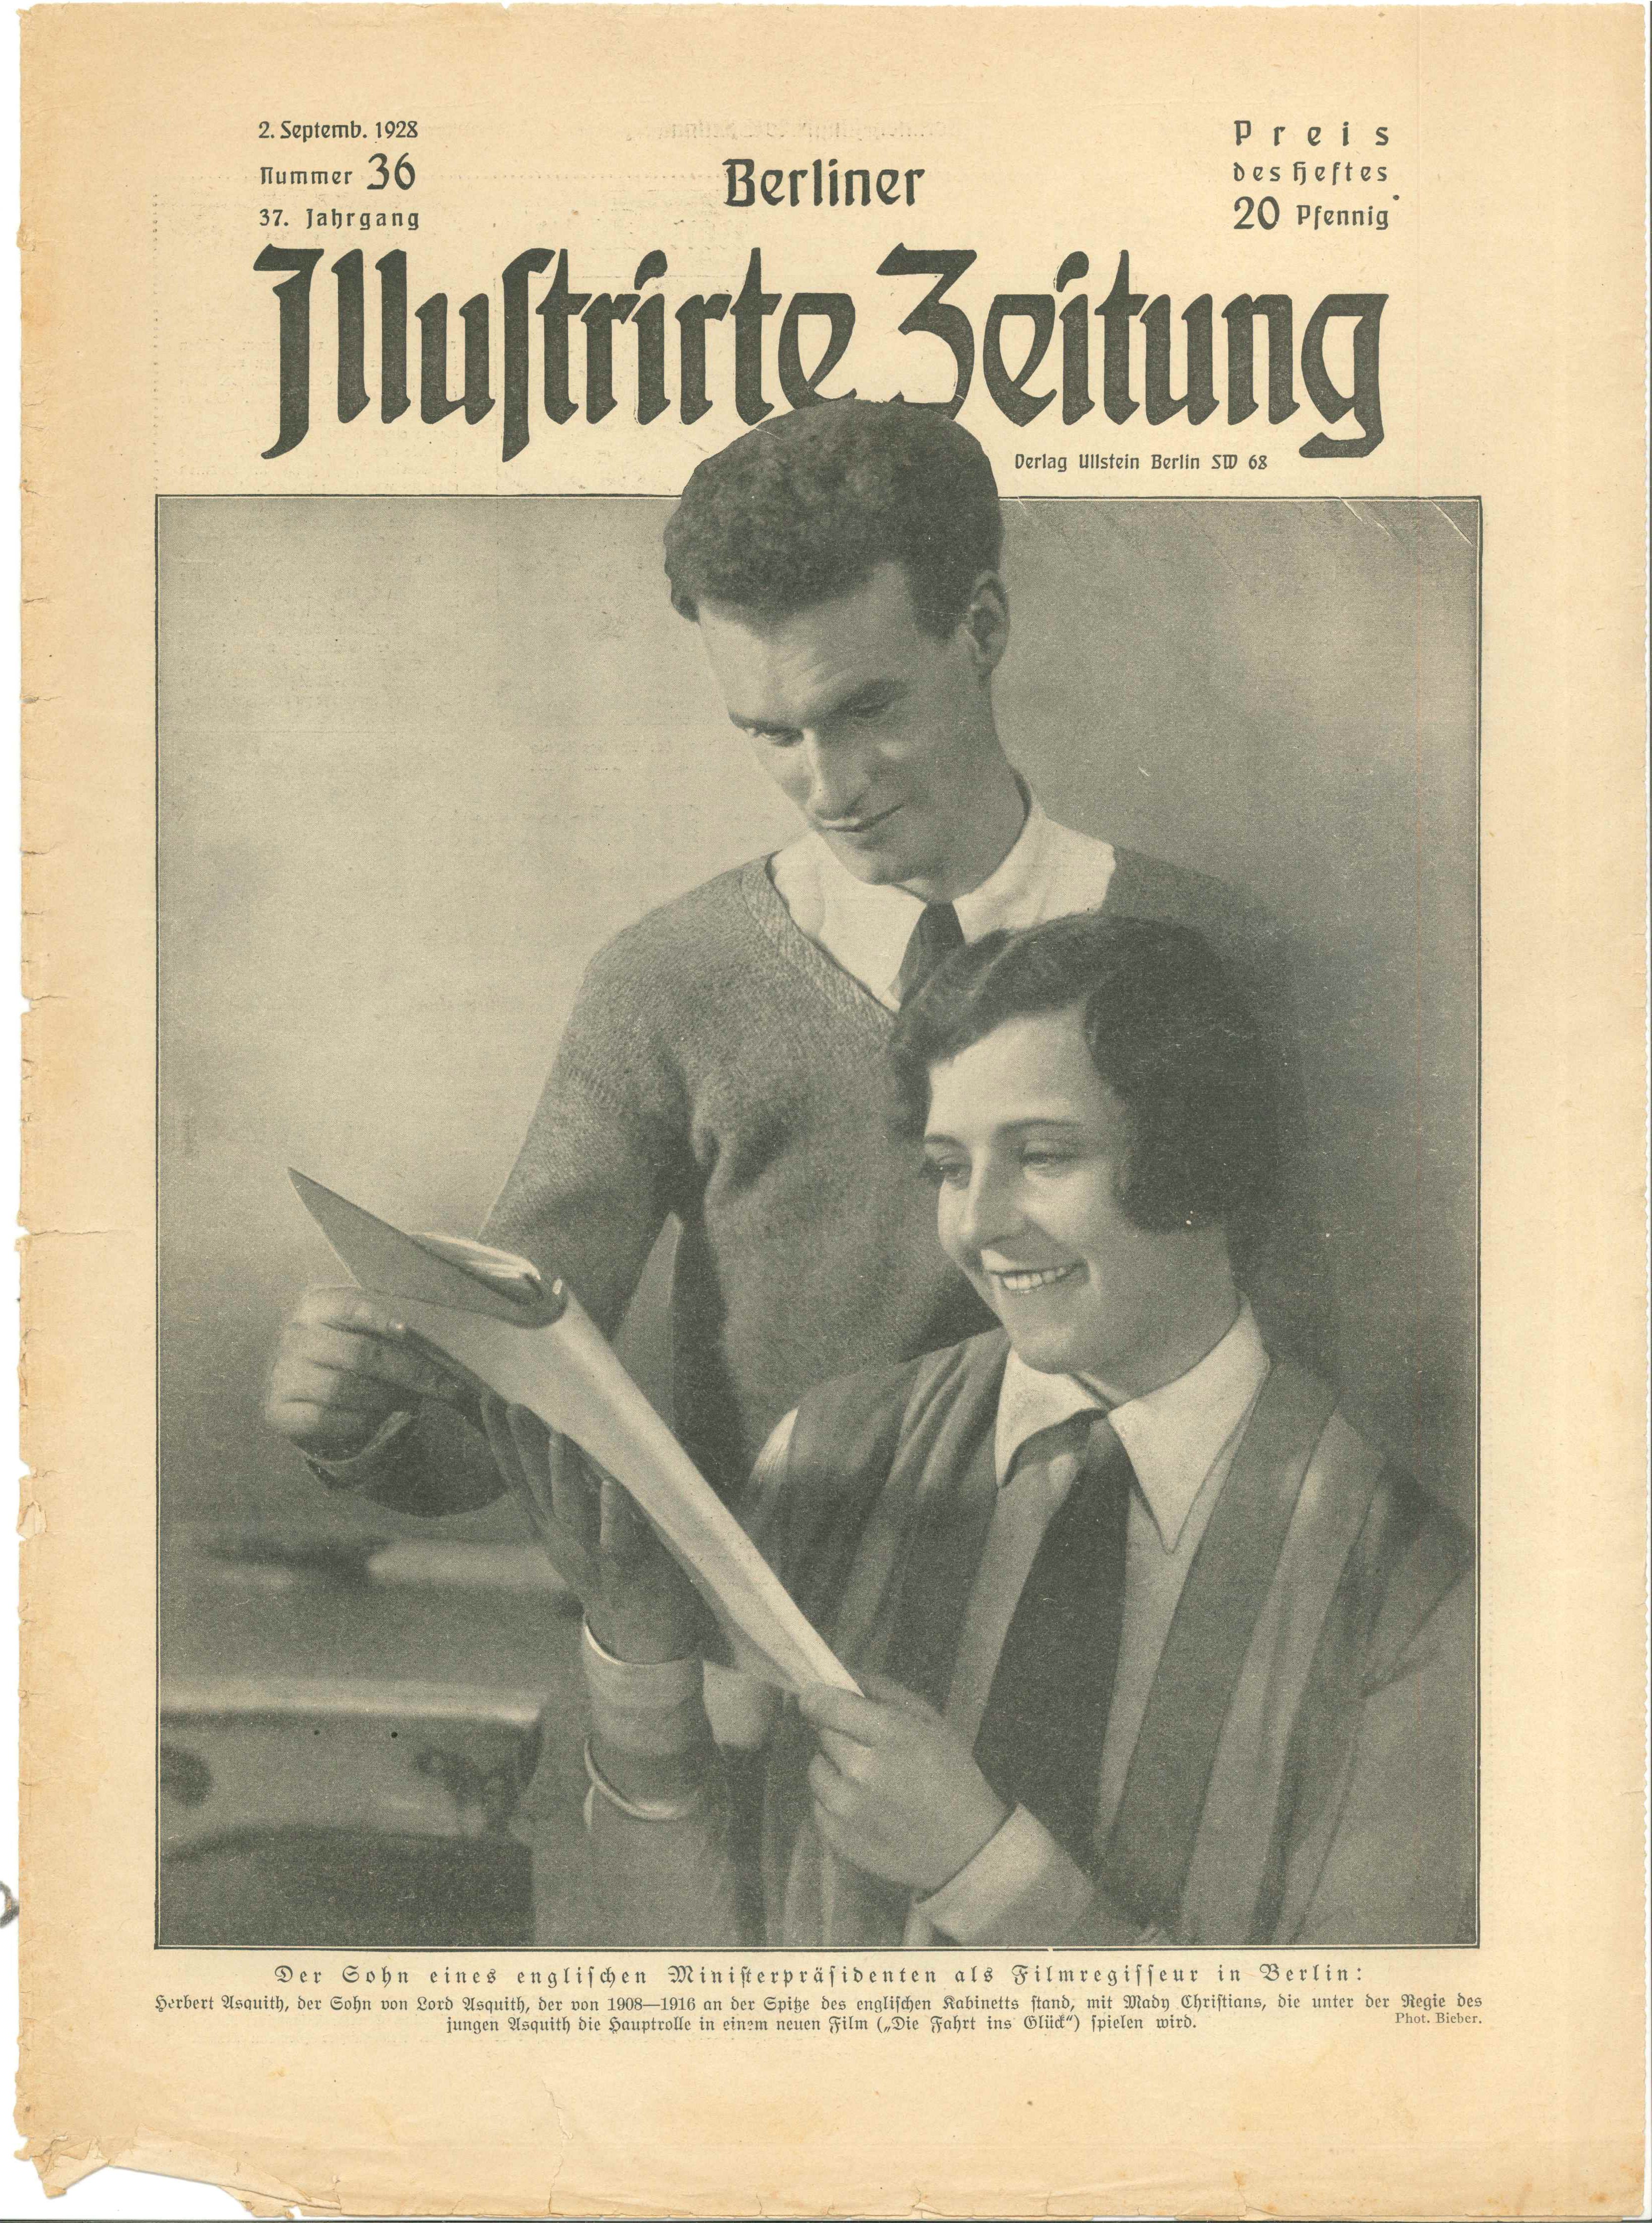 BIZ, Nr. 36, 1928, Titelseite (Kurt Tucholsky Literaturmuseum CC BY-NC-SA)